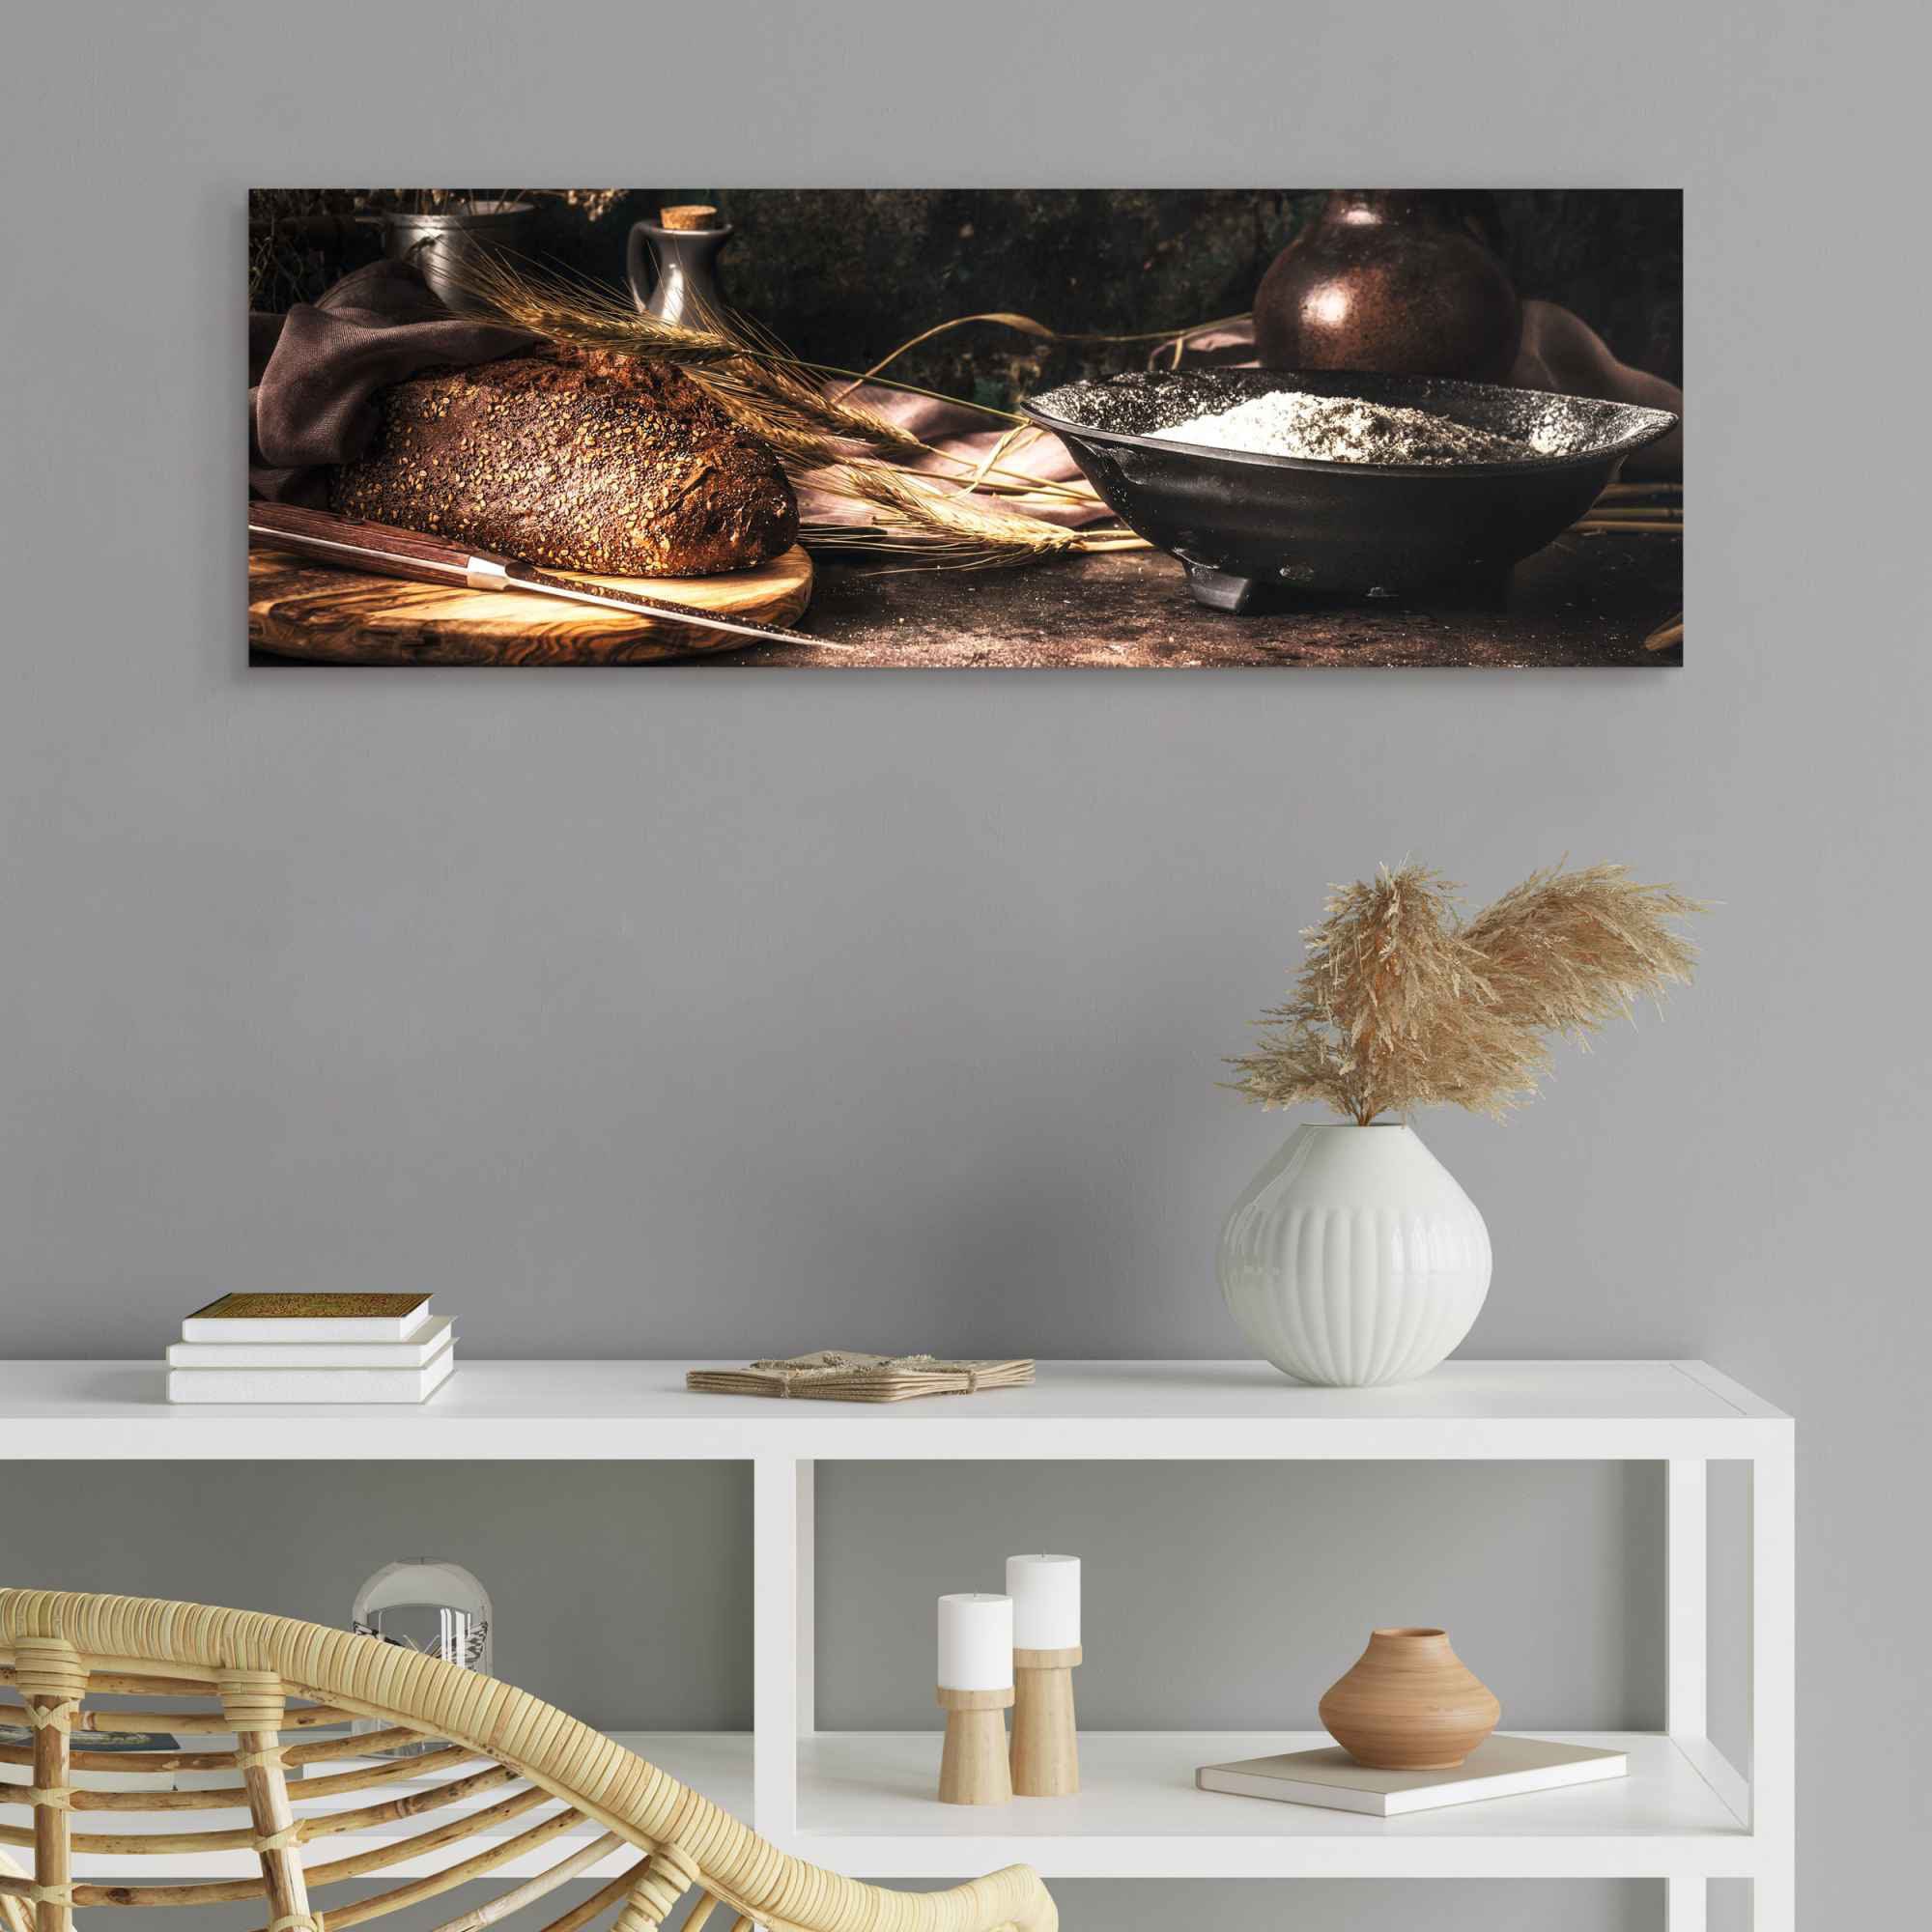 Reinders! Wandbild »Wandbild Brot Stilleben (1 Bäcker bestellen Zutaten«, Getreide - St.) Raten Essen, auf - - Küche